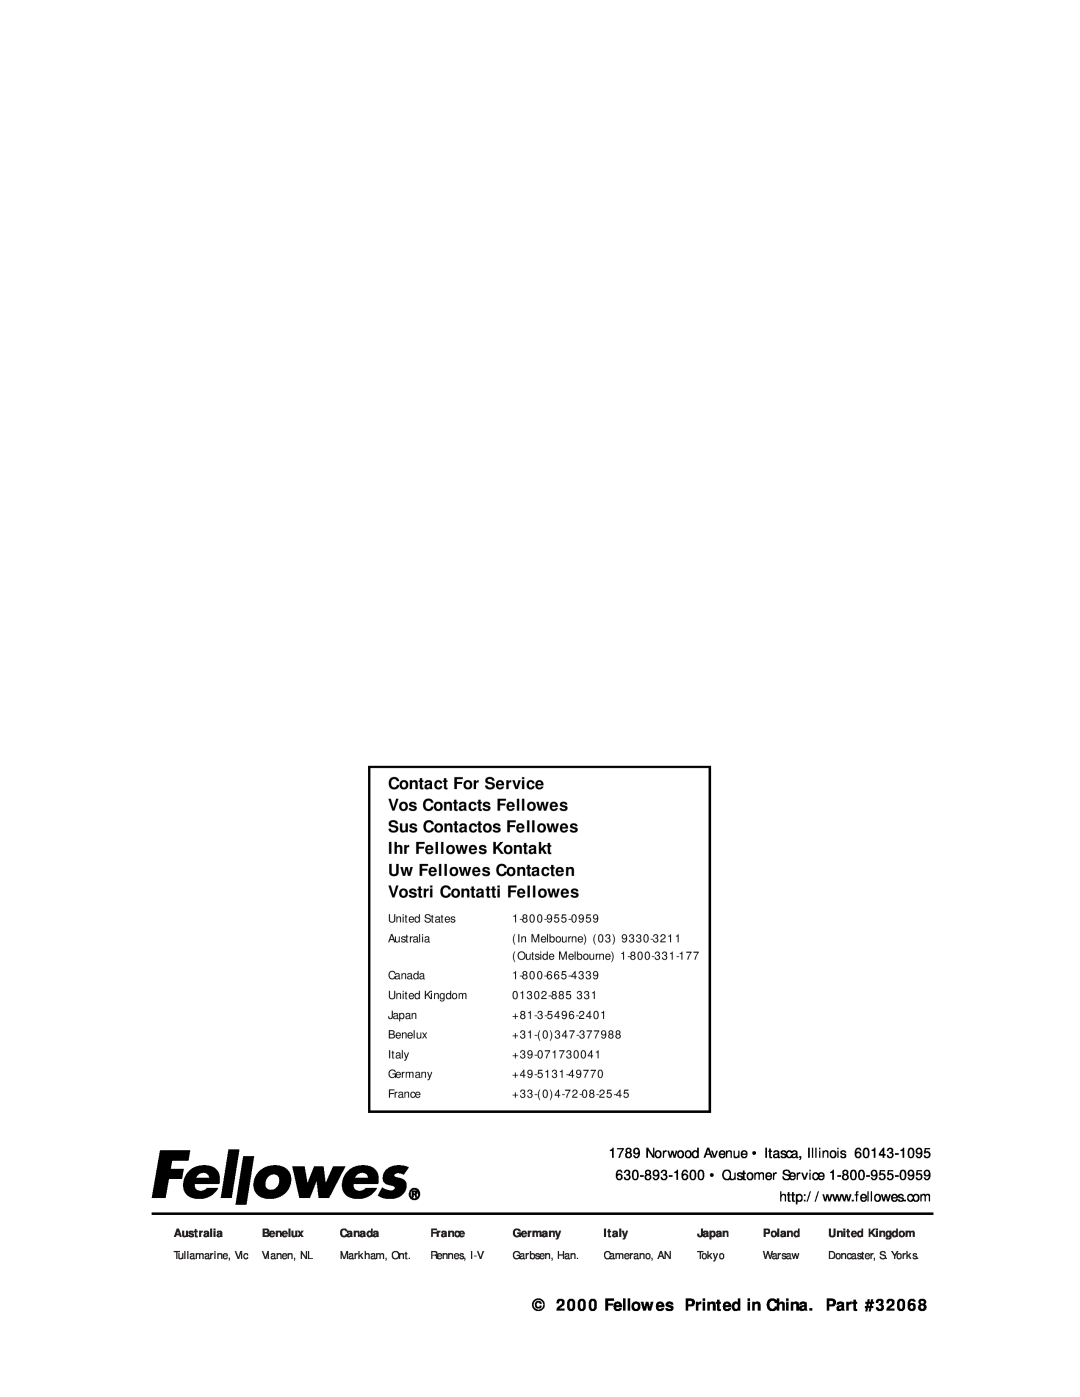 Fellowes FS 5+ S5 Fellowes Printed in China, Contact For Service, Vos Contacts Fellowes, Ihr Fellowes Kontakt, Australia 